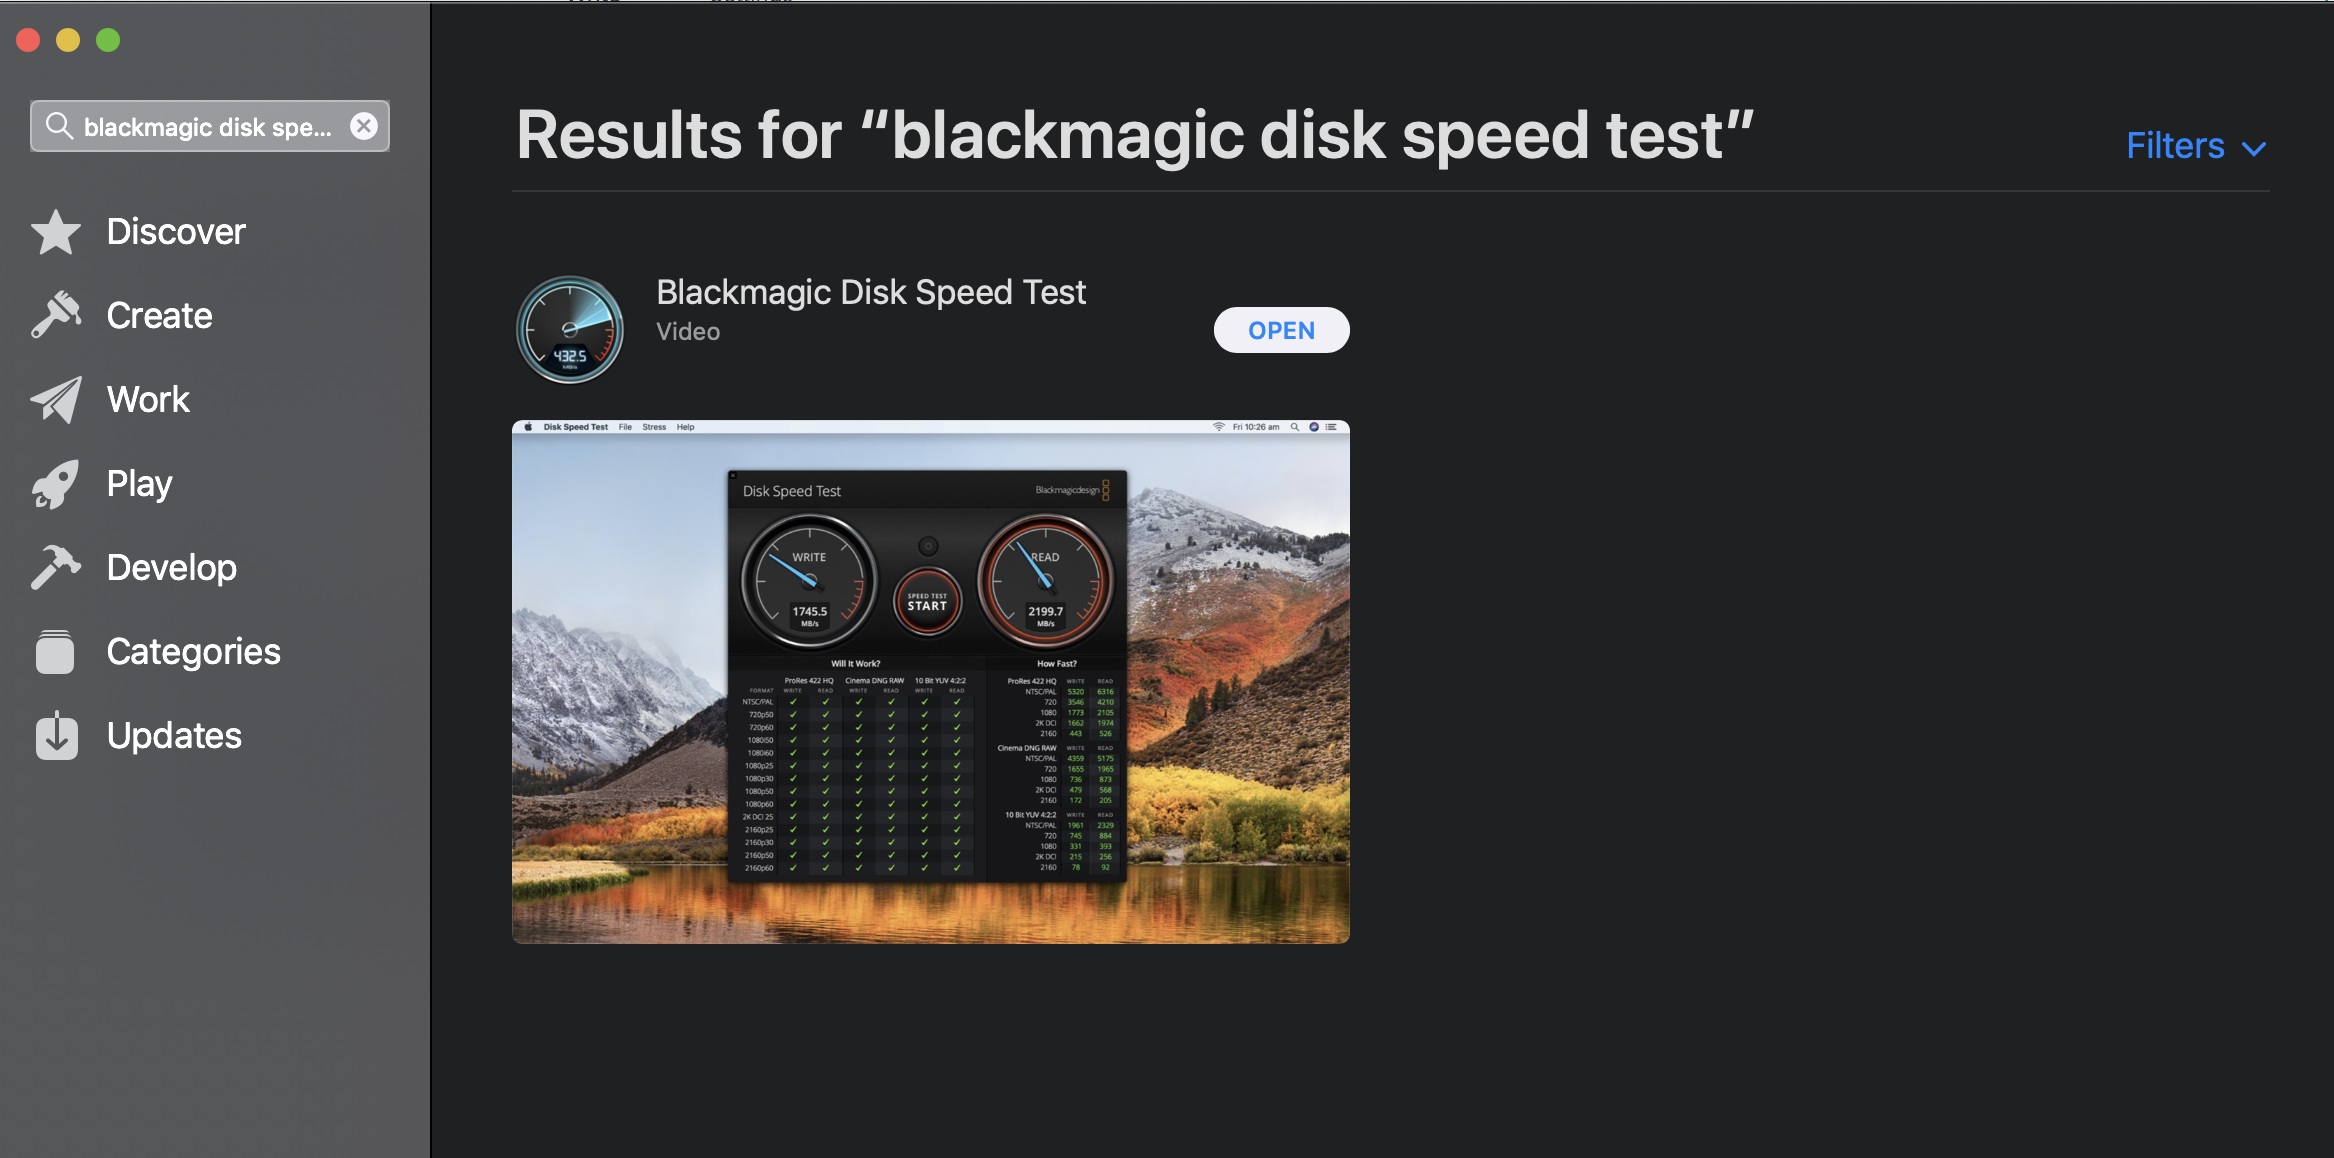 blackmagic raw speed test download